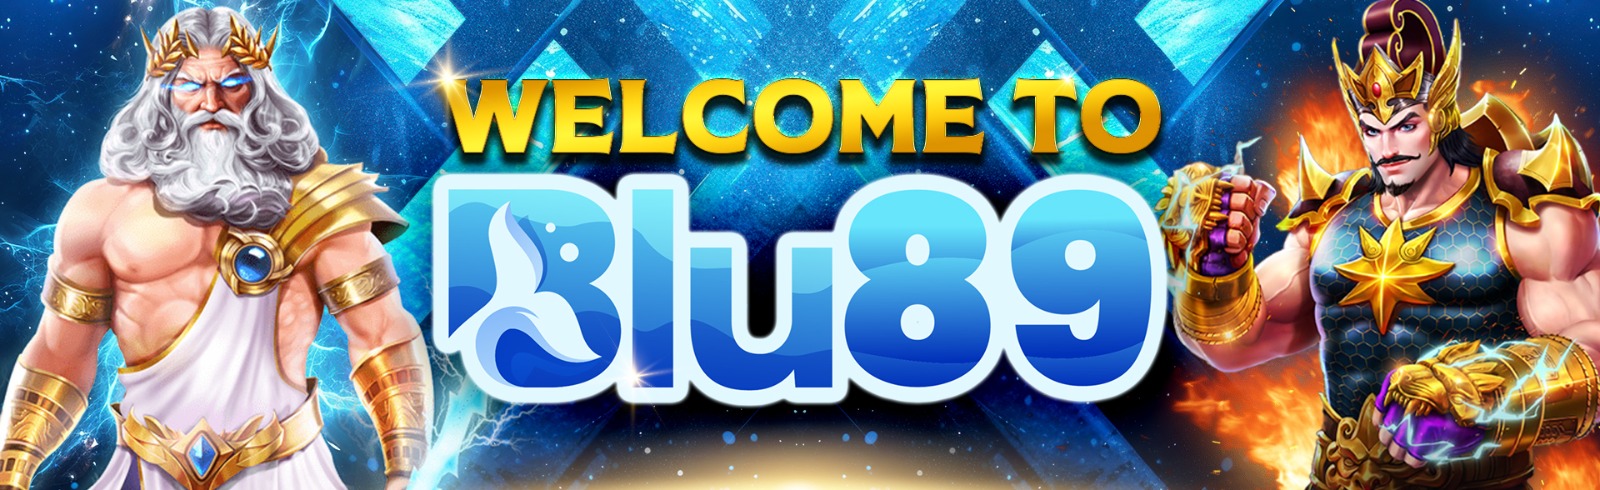 Welcome To Blu89